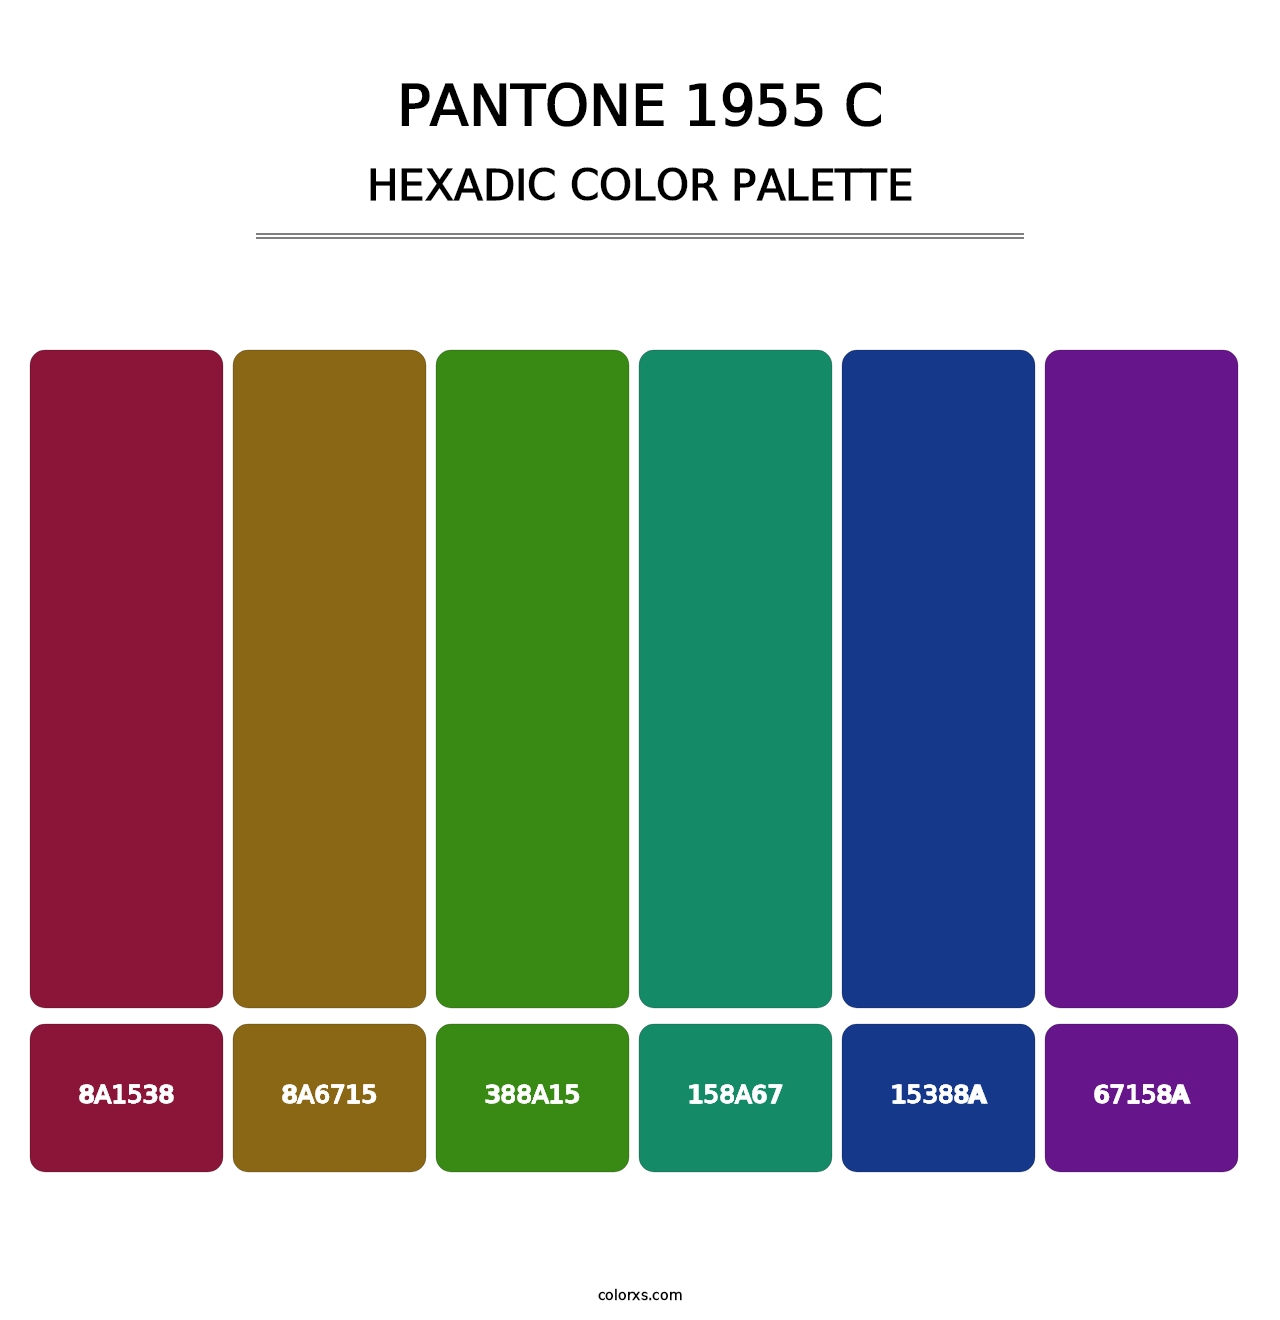 PANTONE 1955 C - Hexadic Color Palette